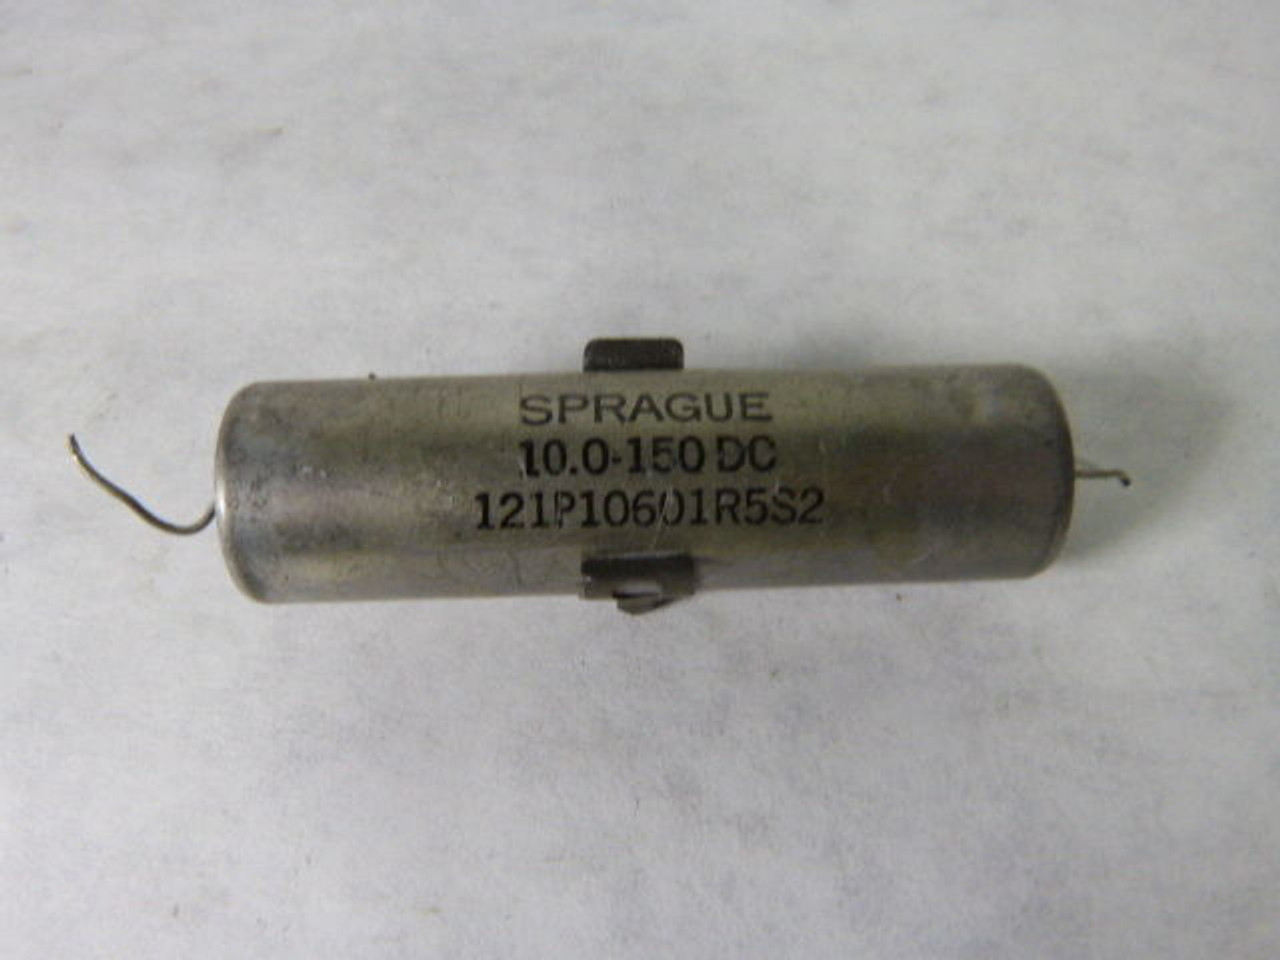 Sprague 121P10601R5S2 Capacitor 10.0-150DC USED